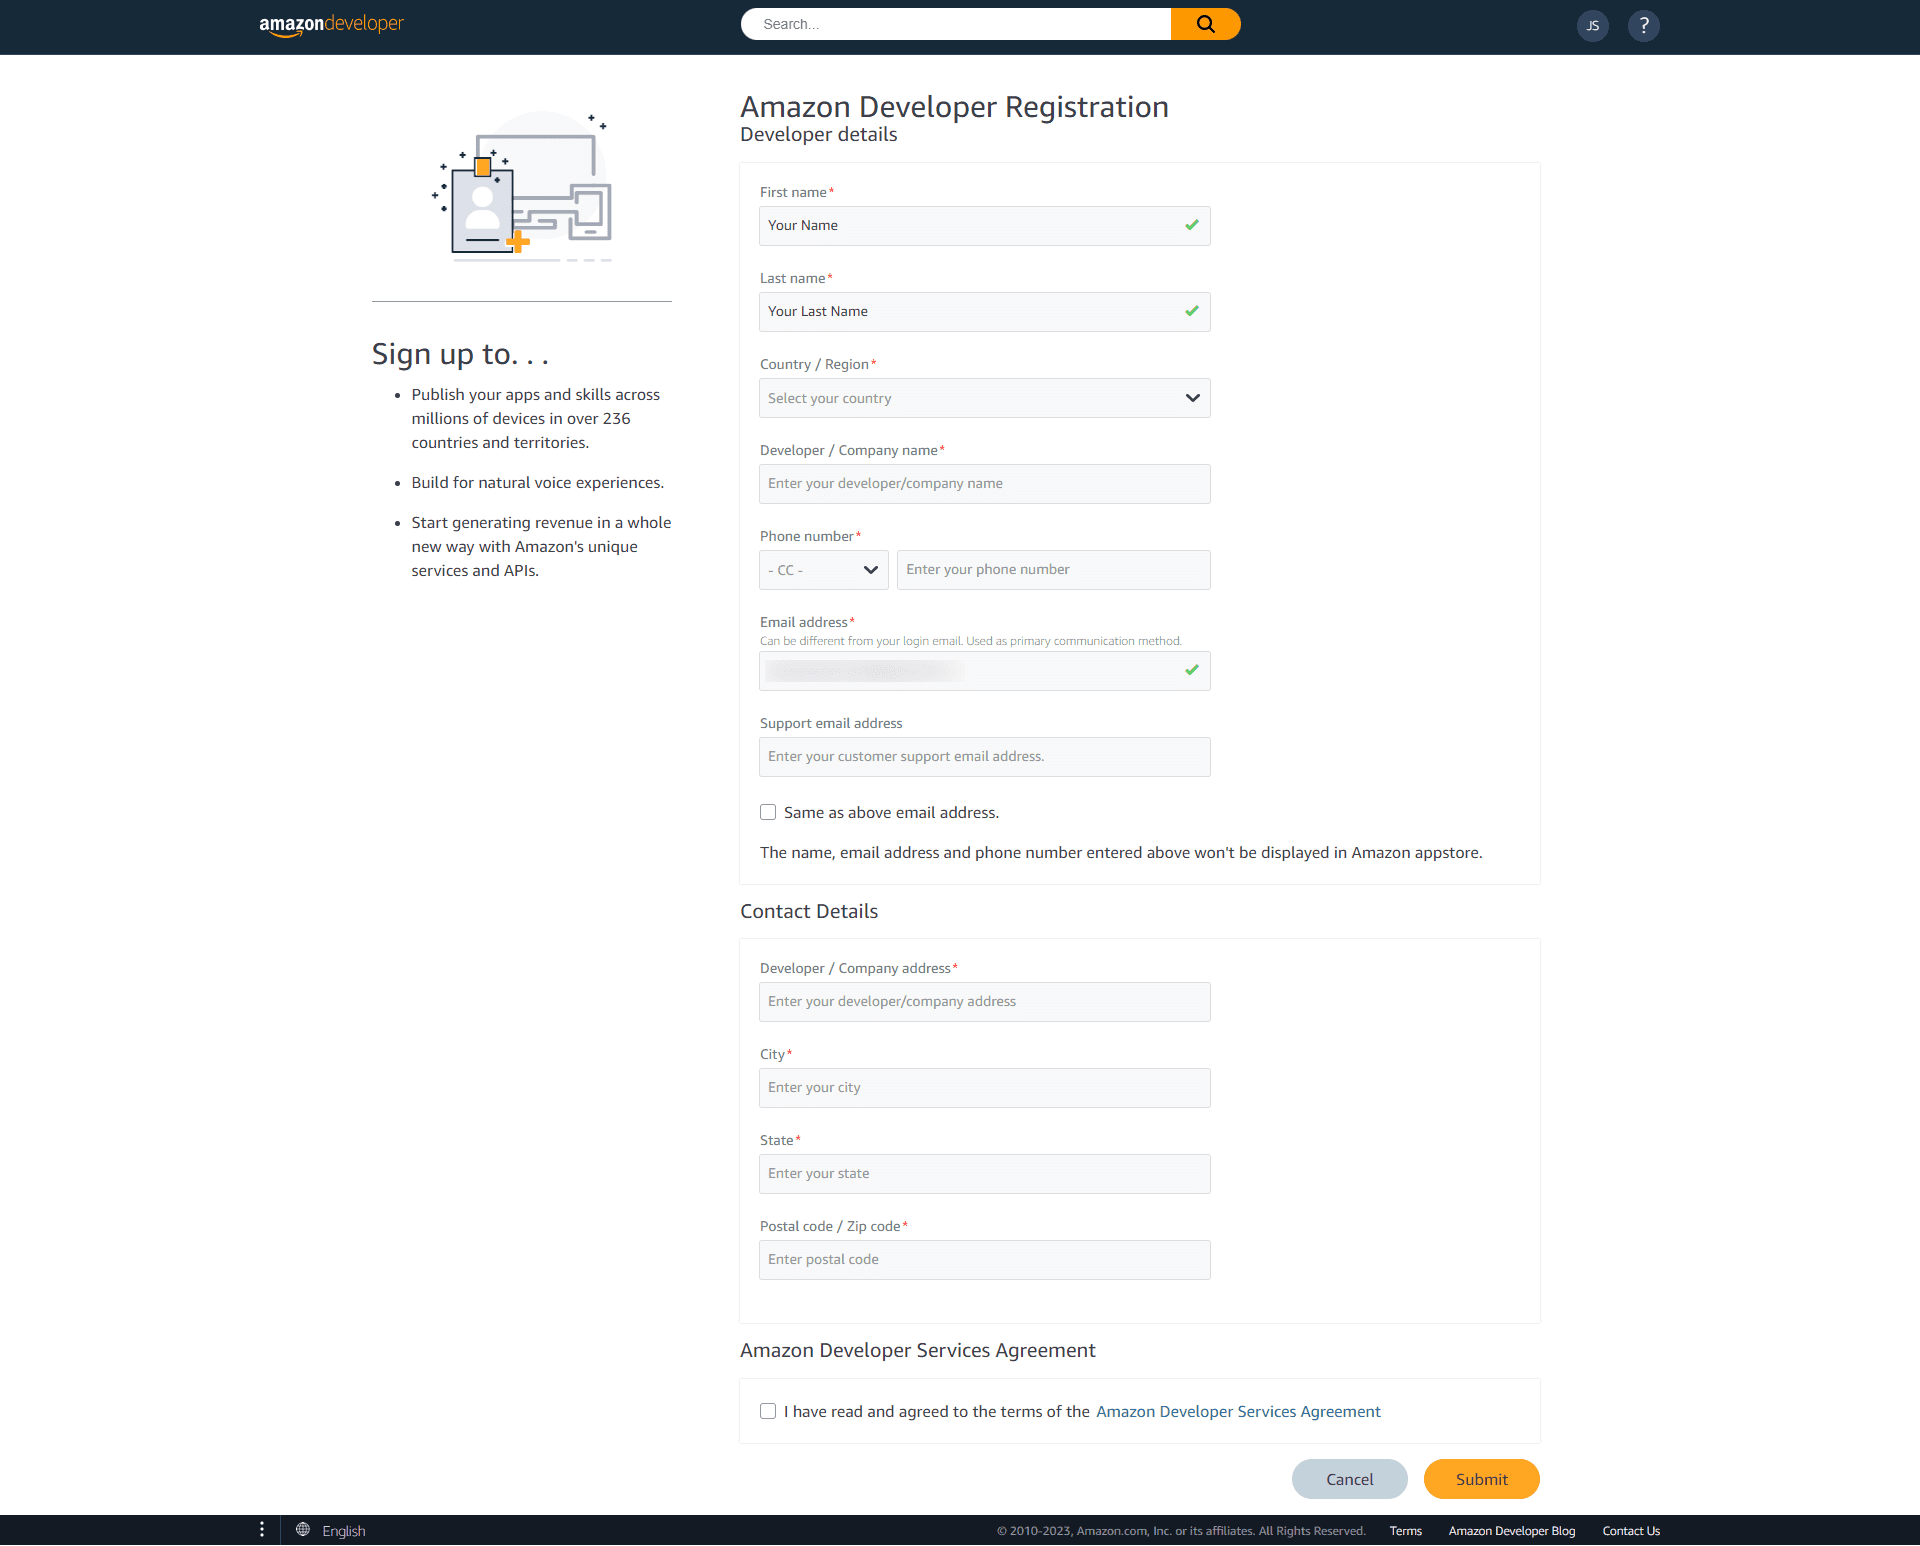 Amazon Developer Registration Form page